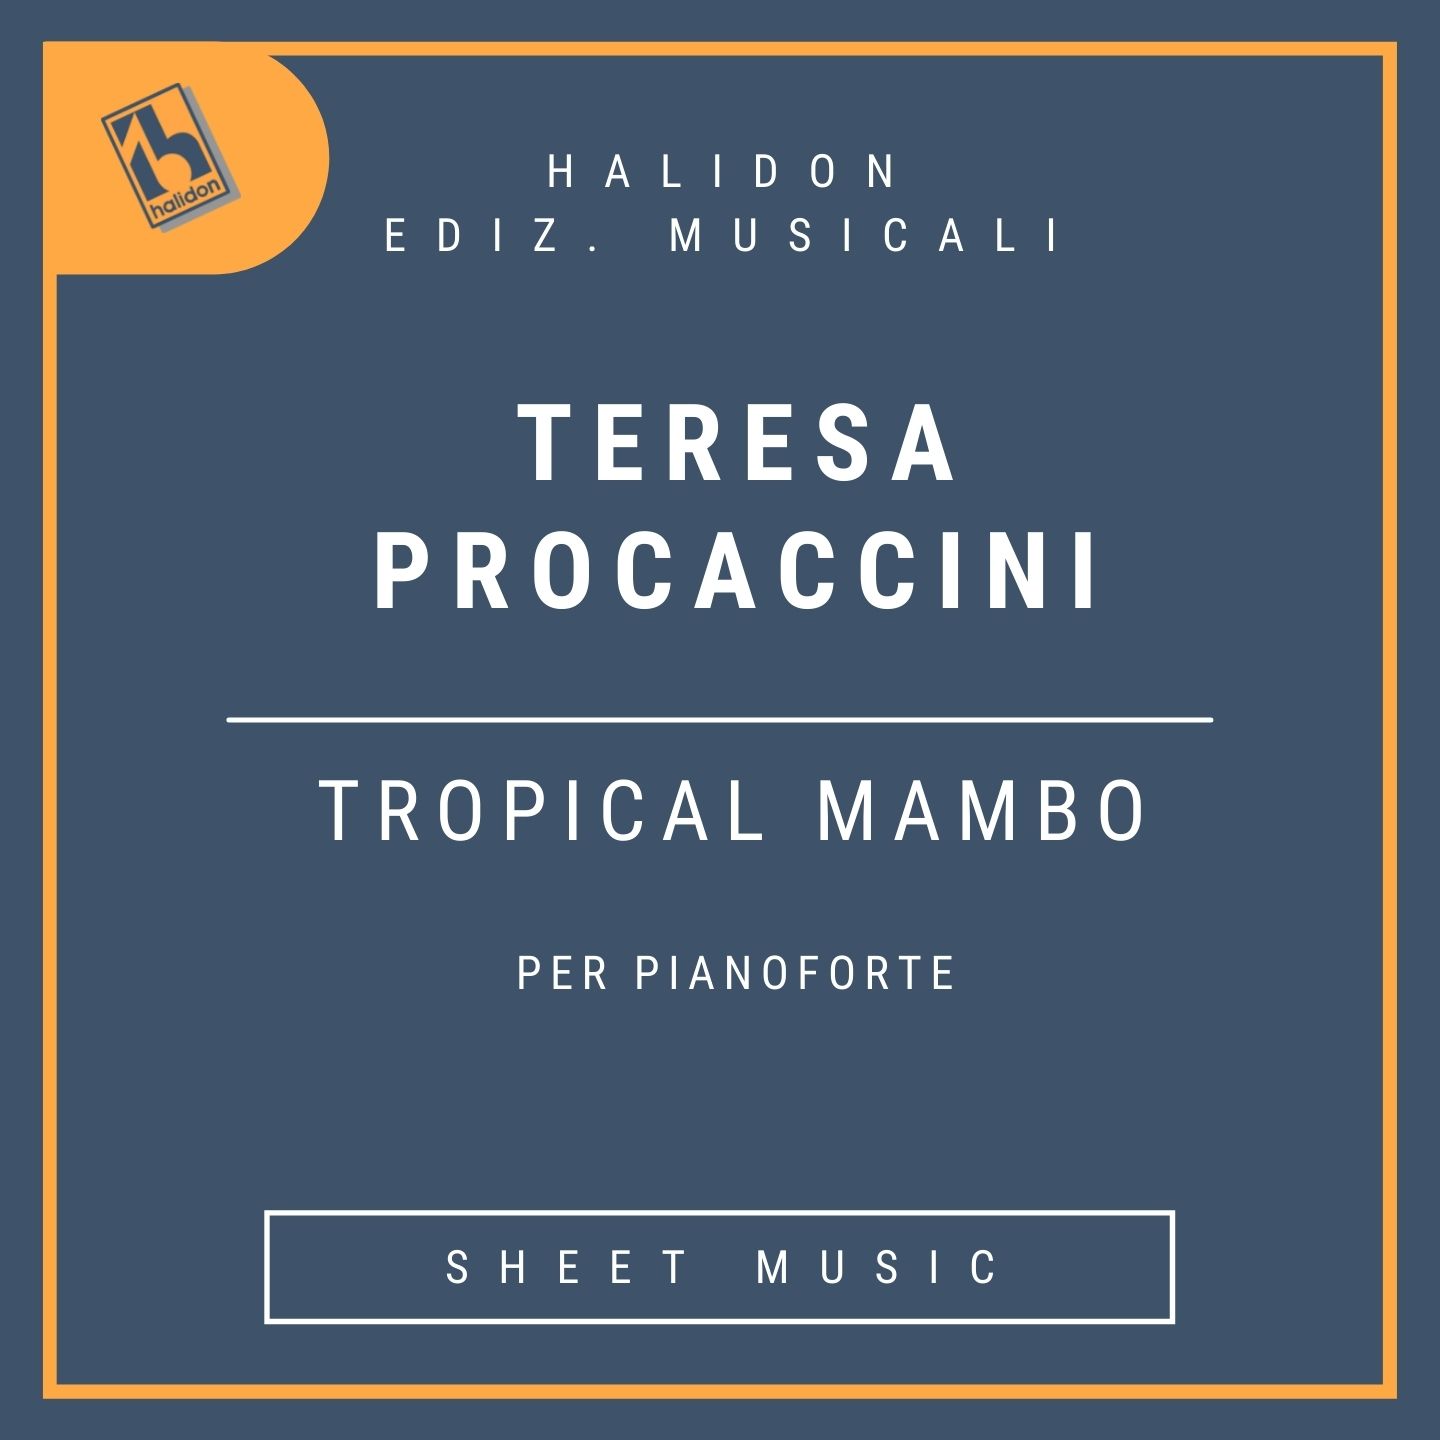 Teresa Procaccini - Tropical mambo